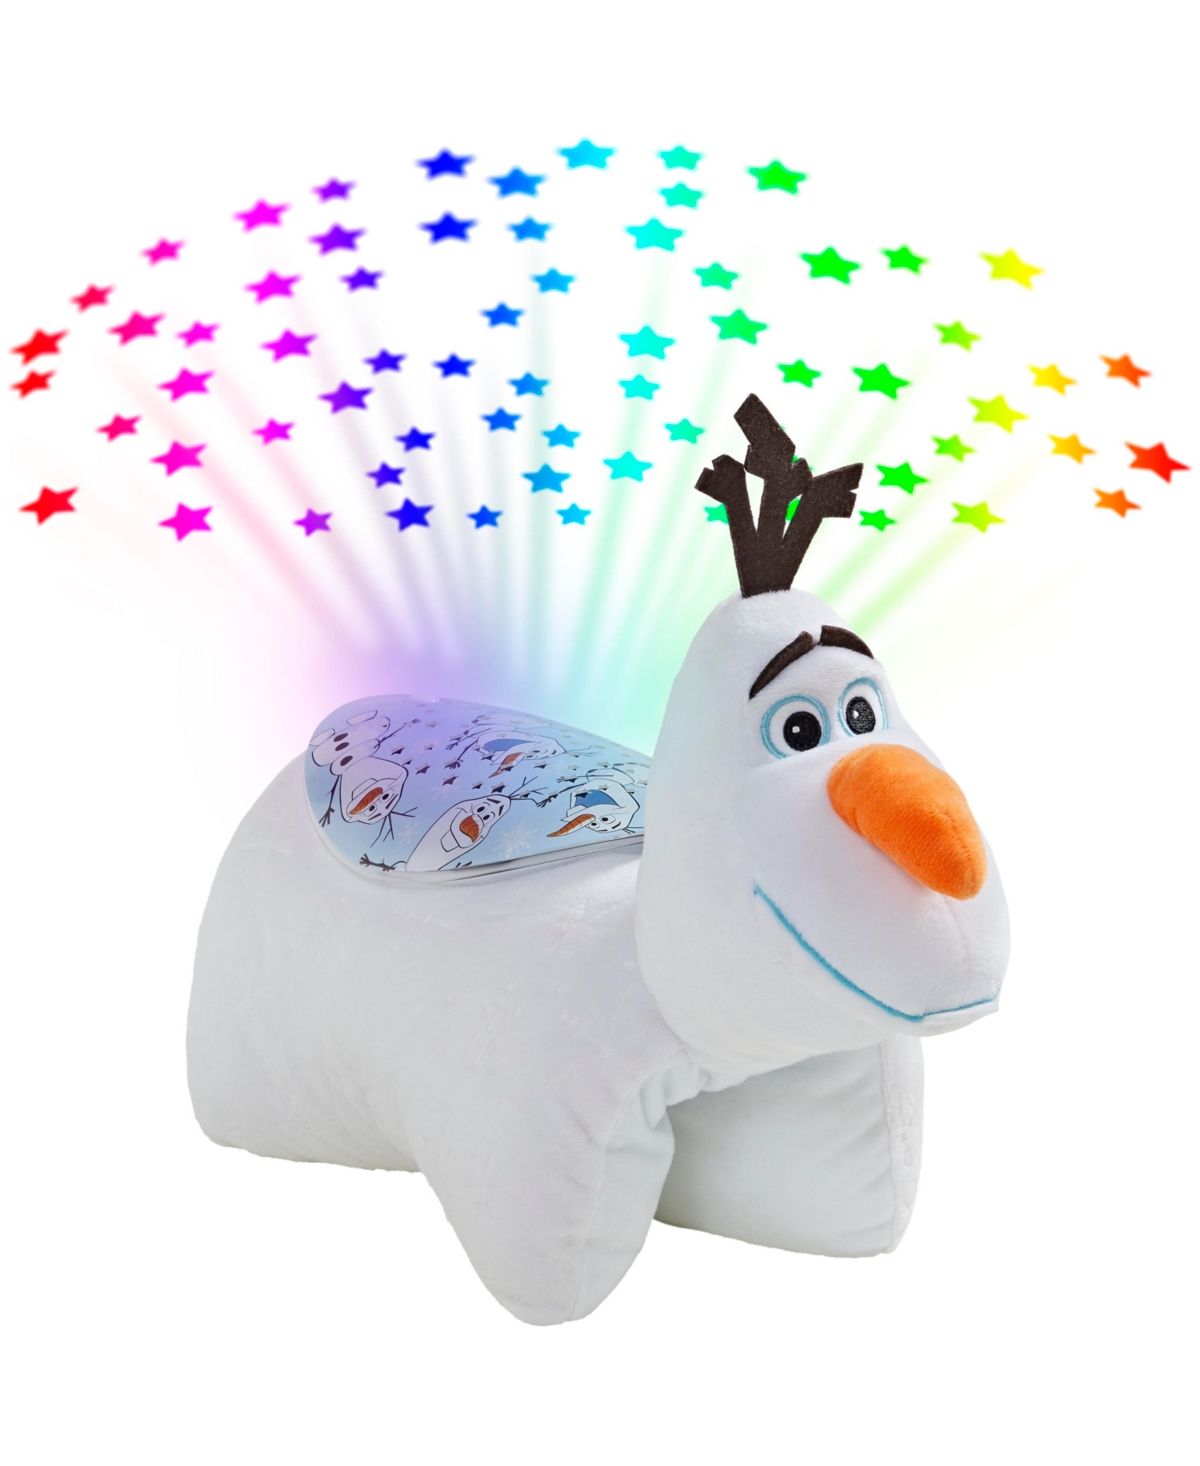 Pillow Pets Disney Frozen Ii Olaf Sleeptime Lite Night Light Plush Toy In White